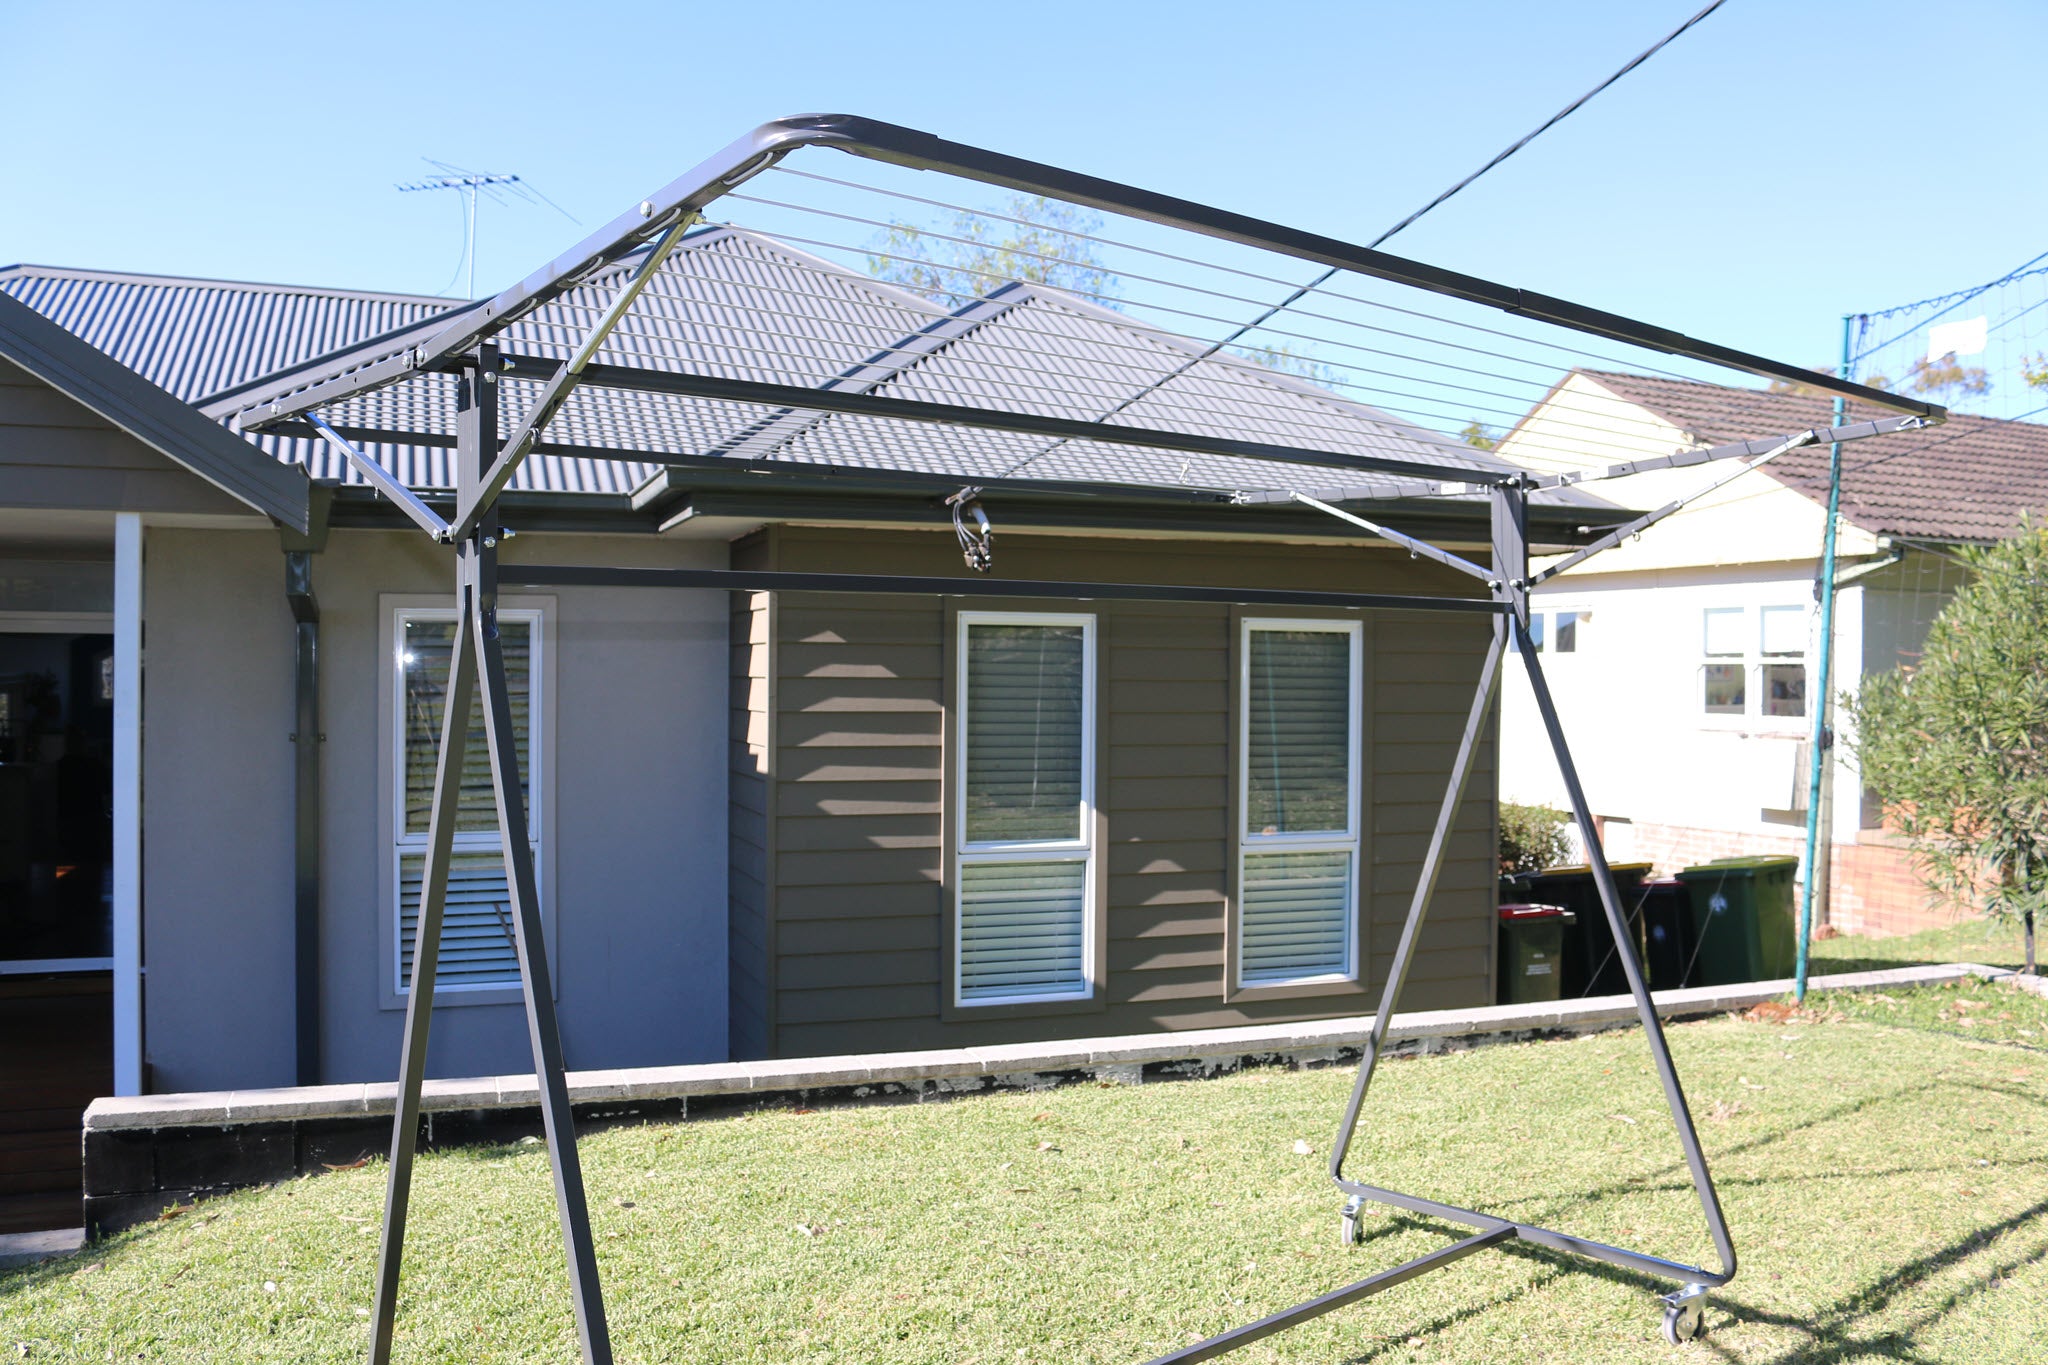 sunchaser mobile clothesline setup on front lawn of home